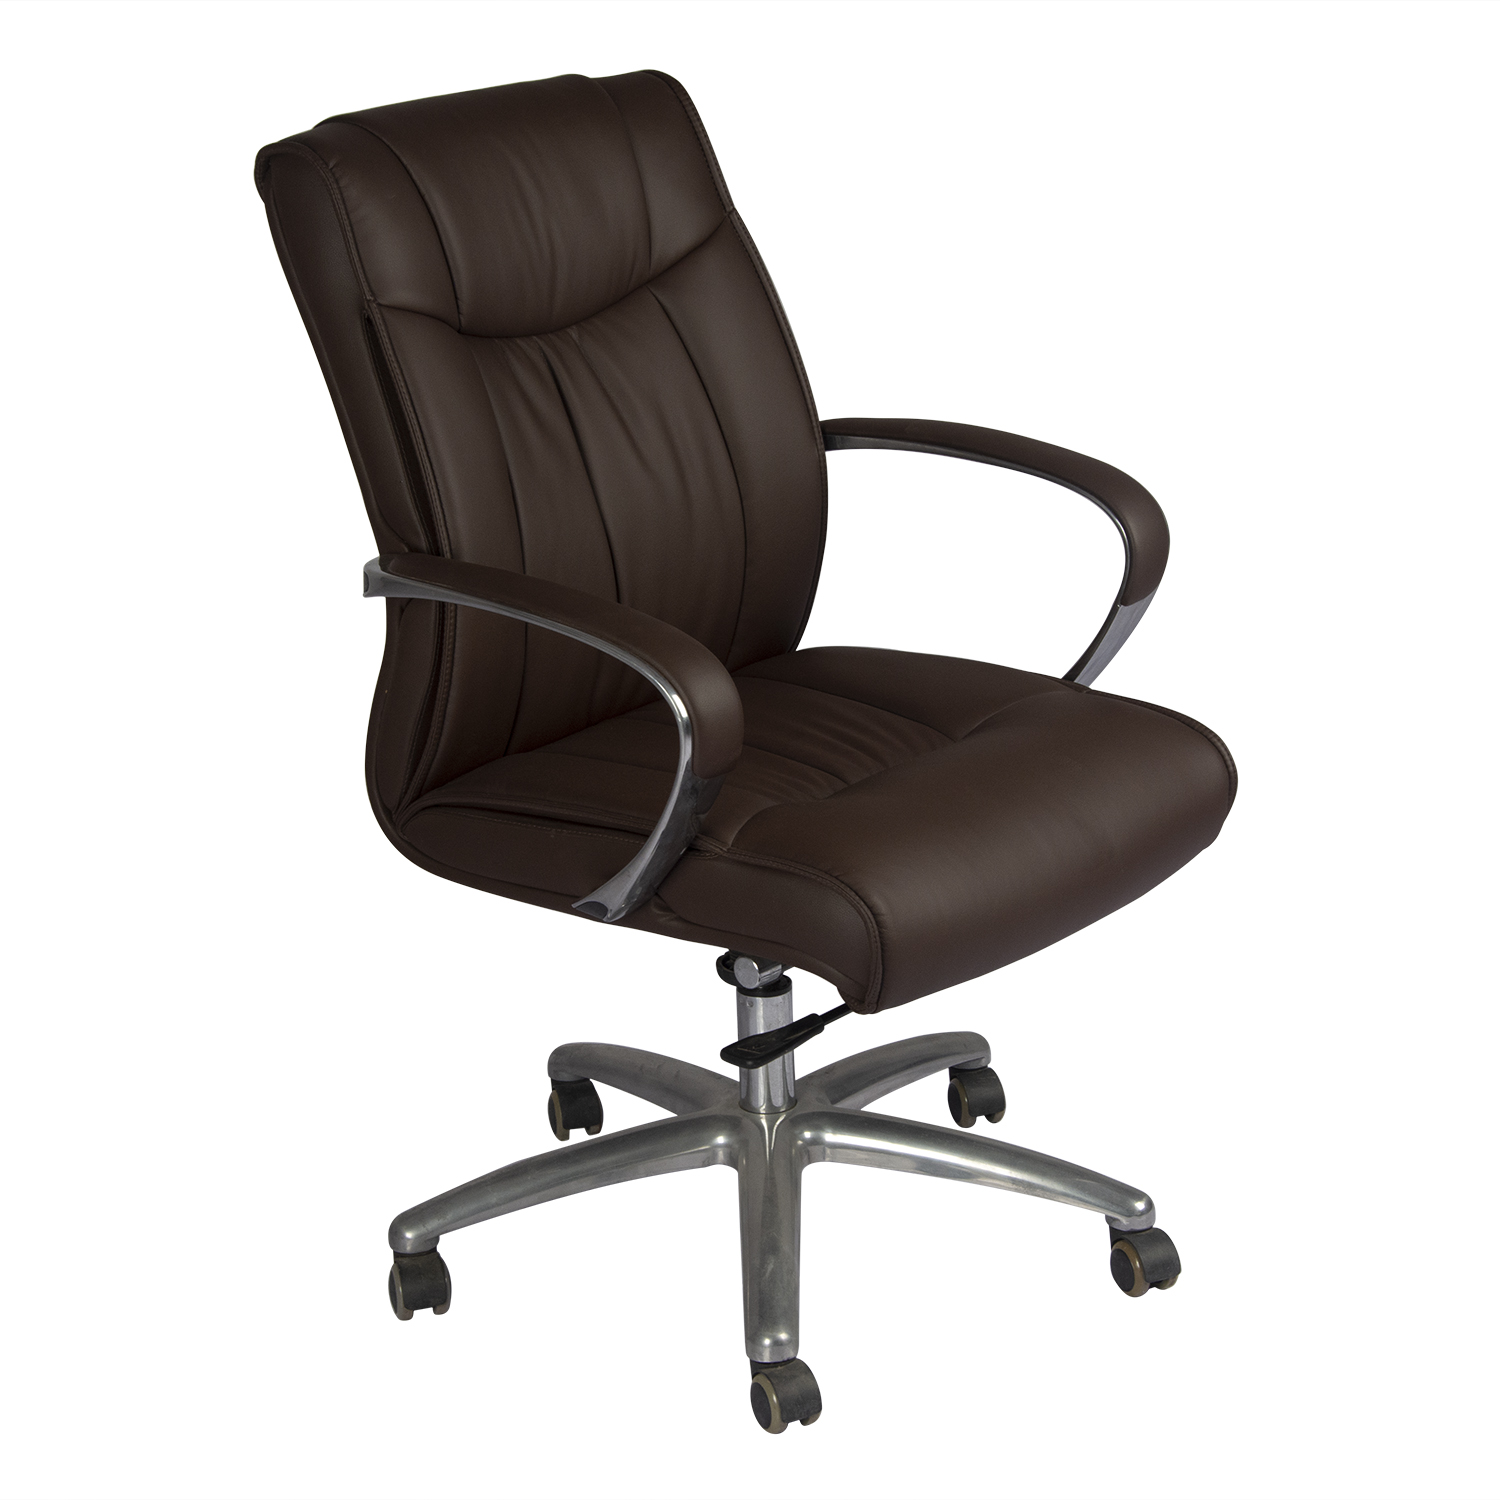 PROFURN EBY 9280 Medium back chair||Brown